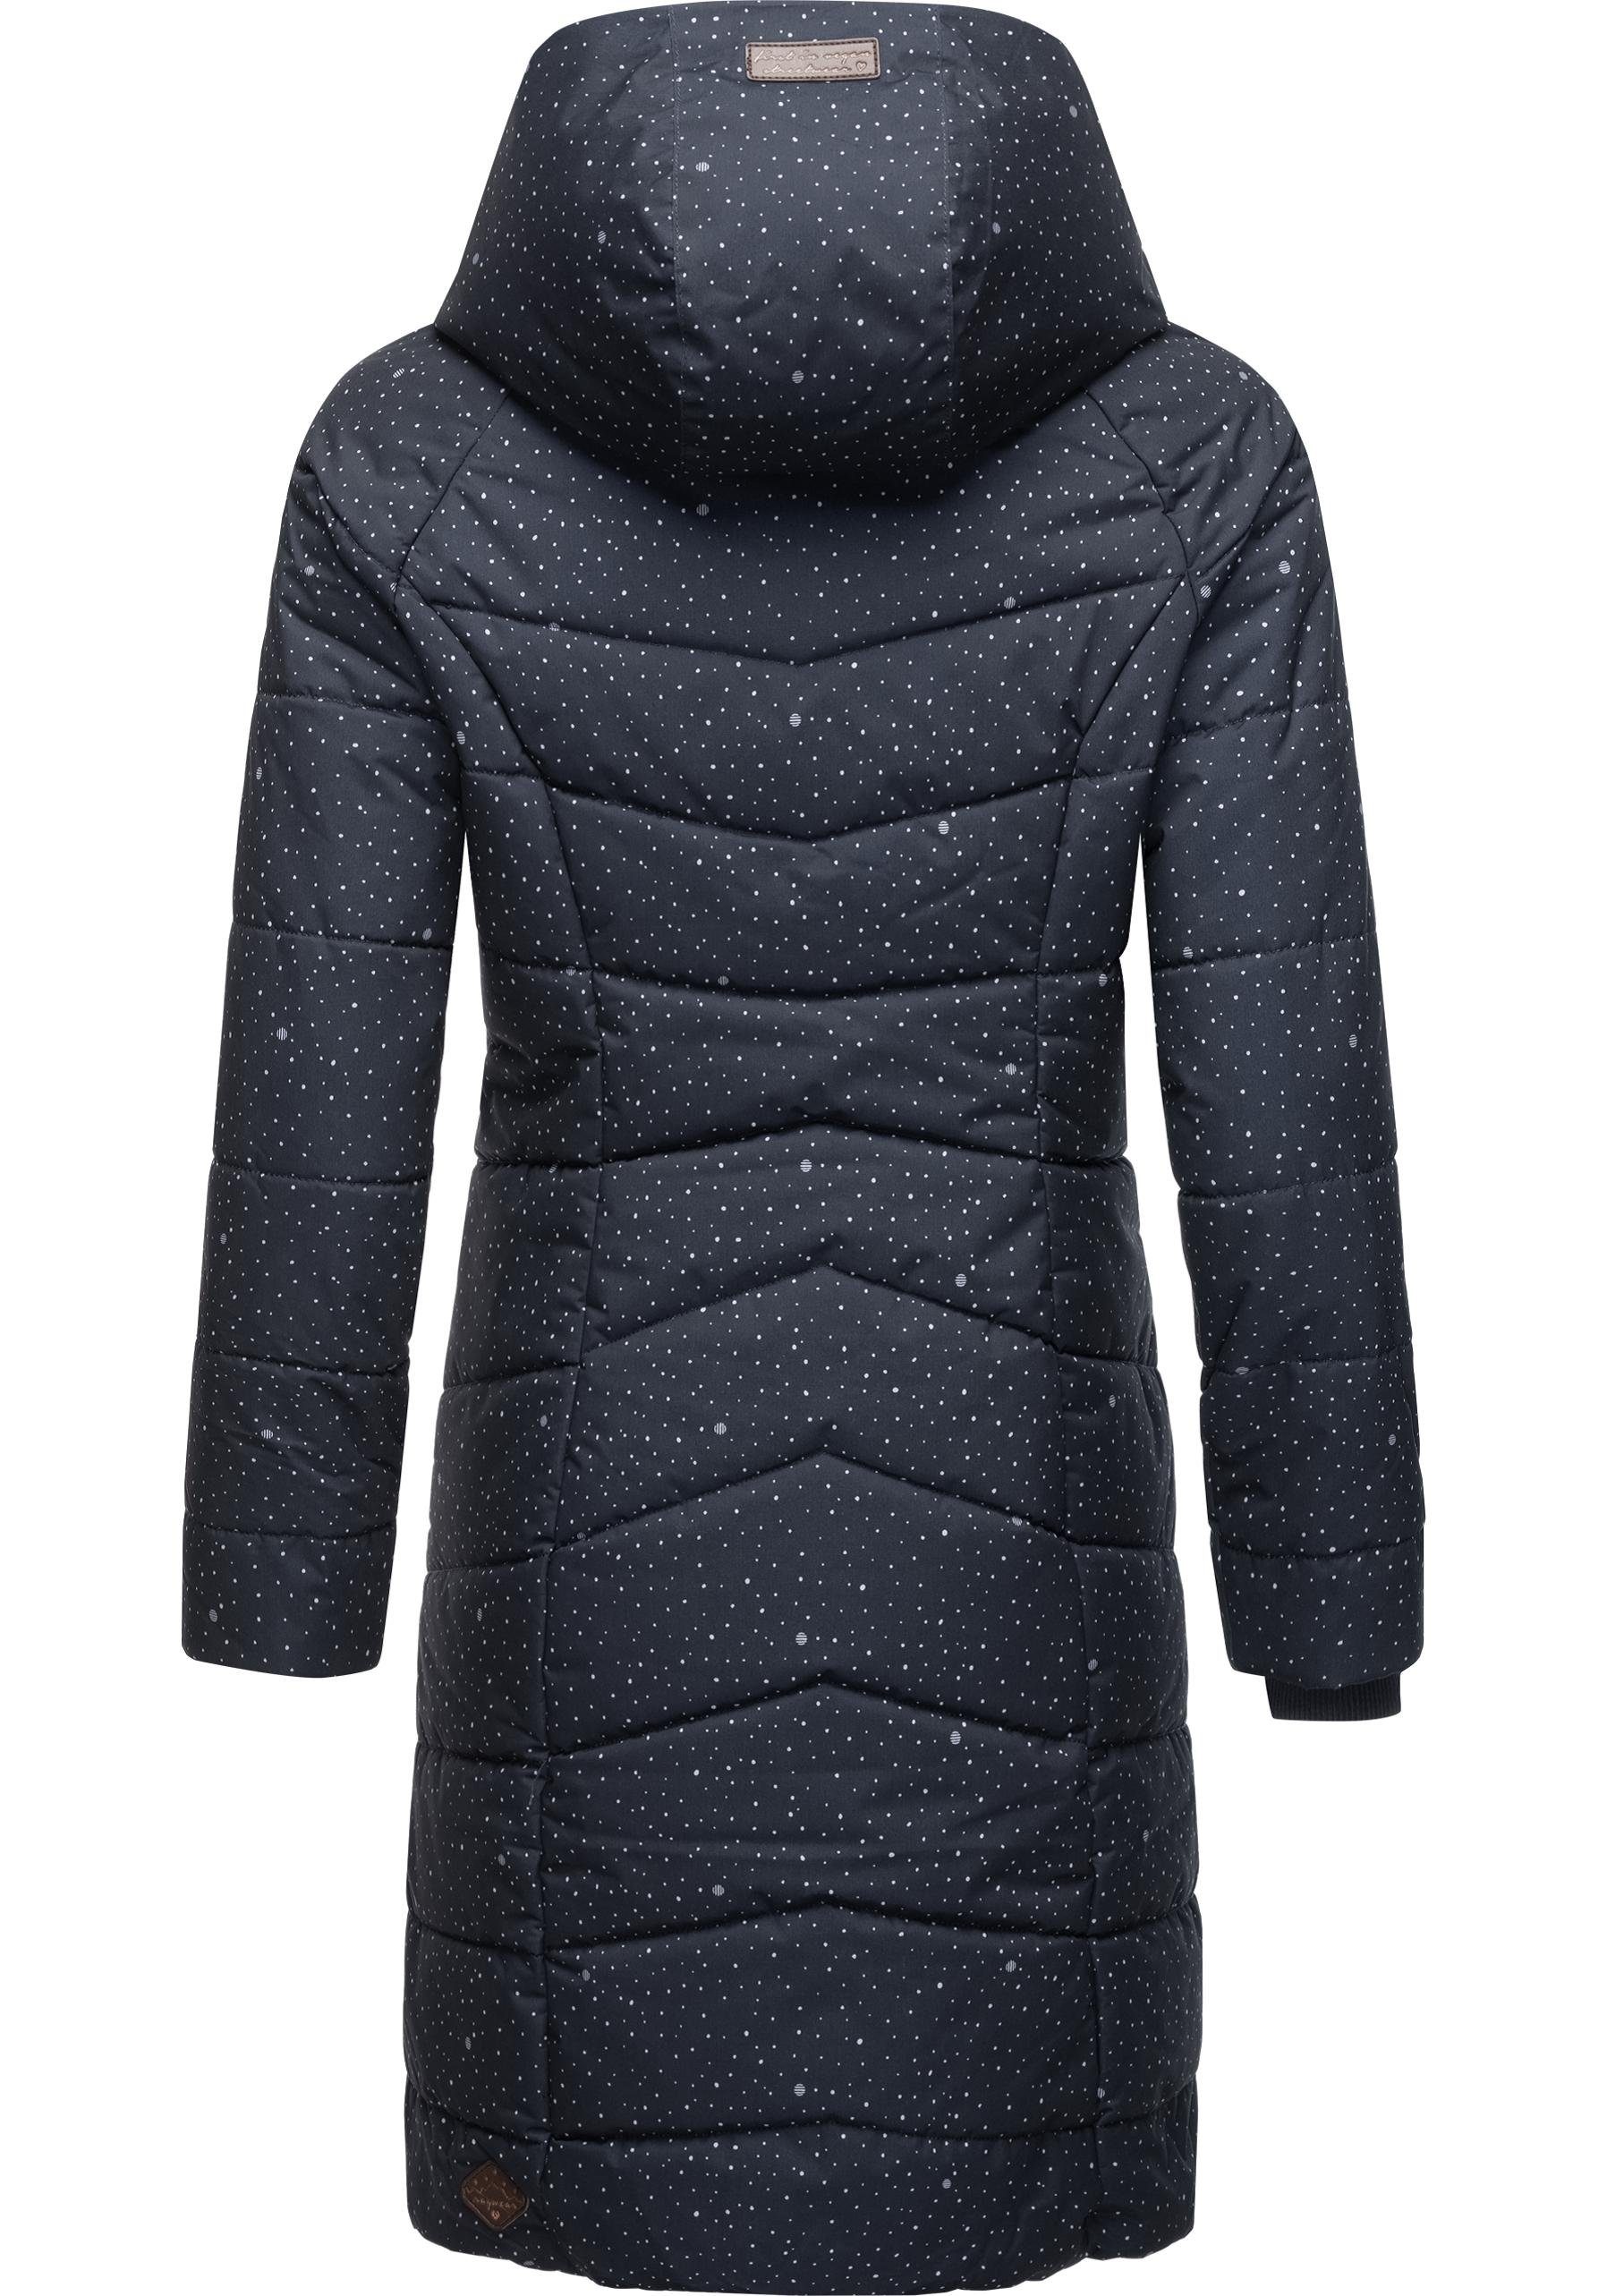 Coat Ragwear Dizzie stylischer, navy gesteppter Print mit Steppmantel Winterparka Kapuze